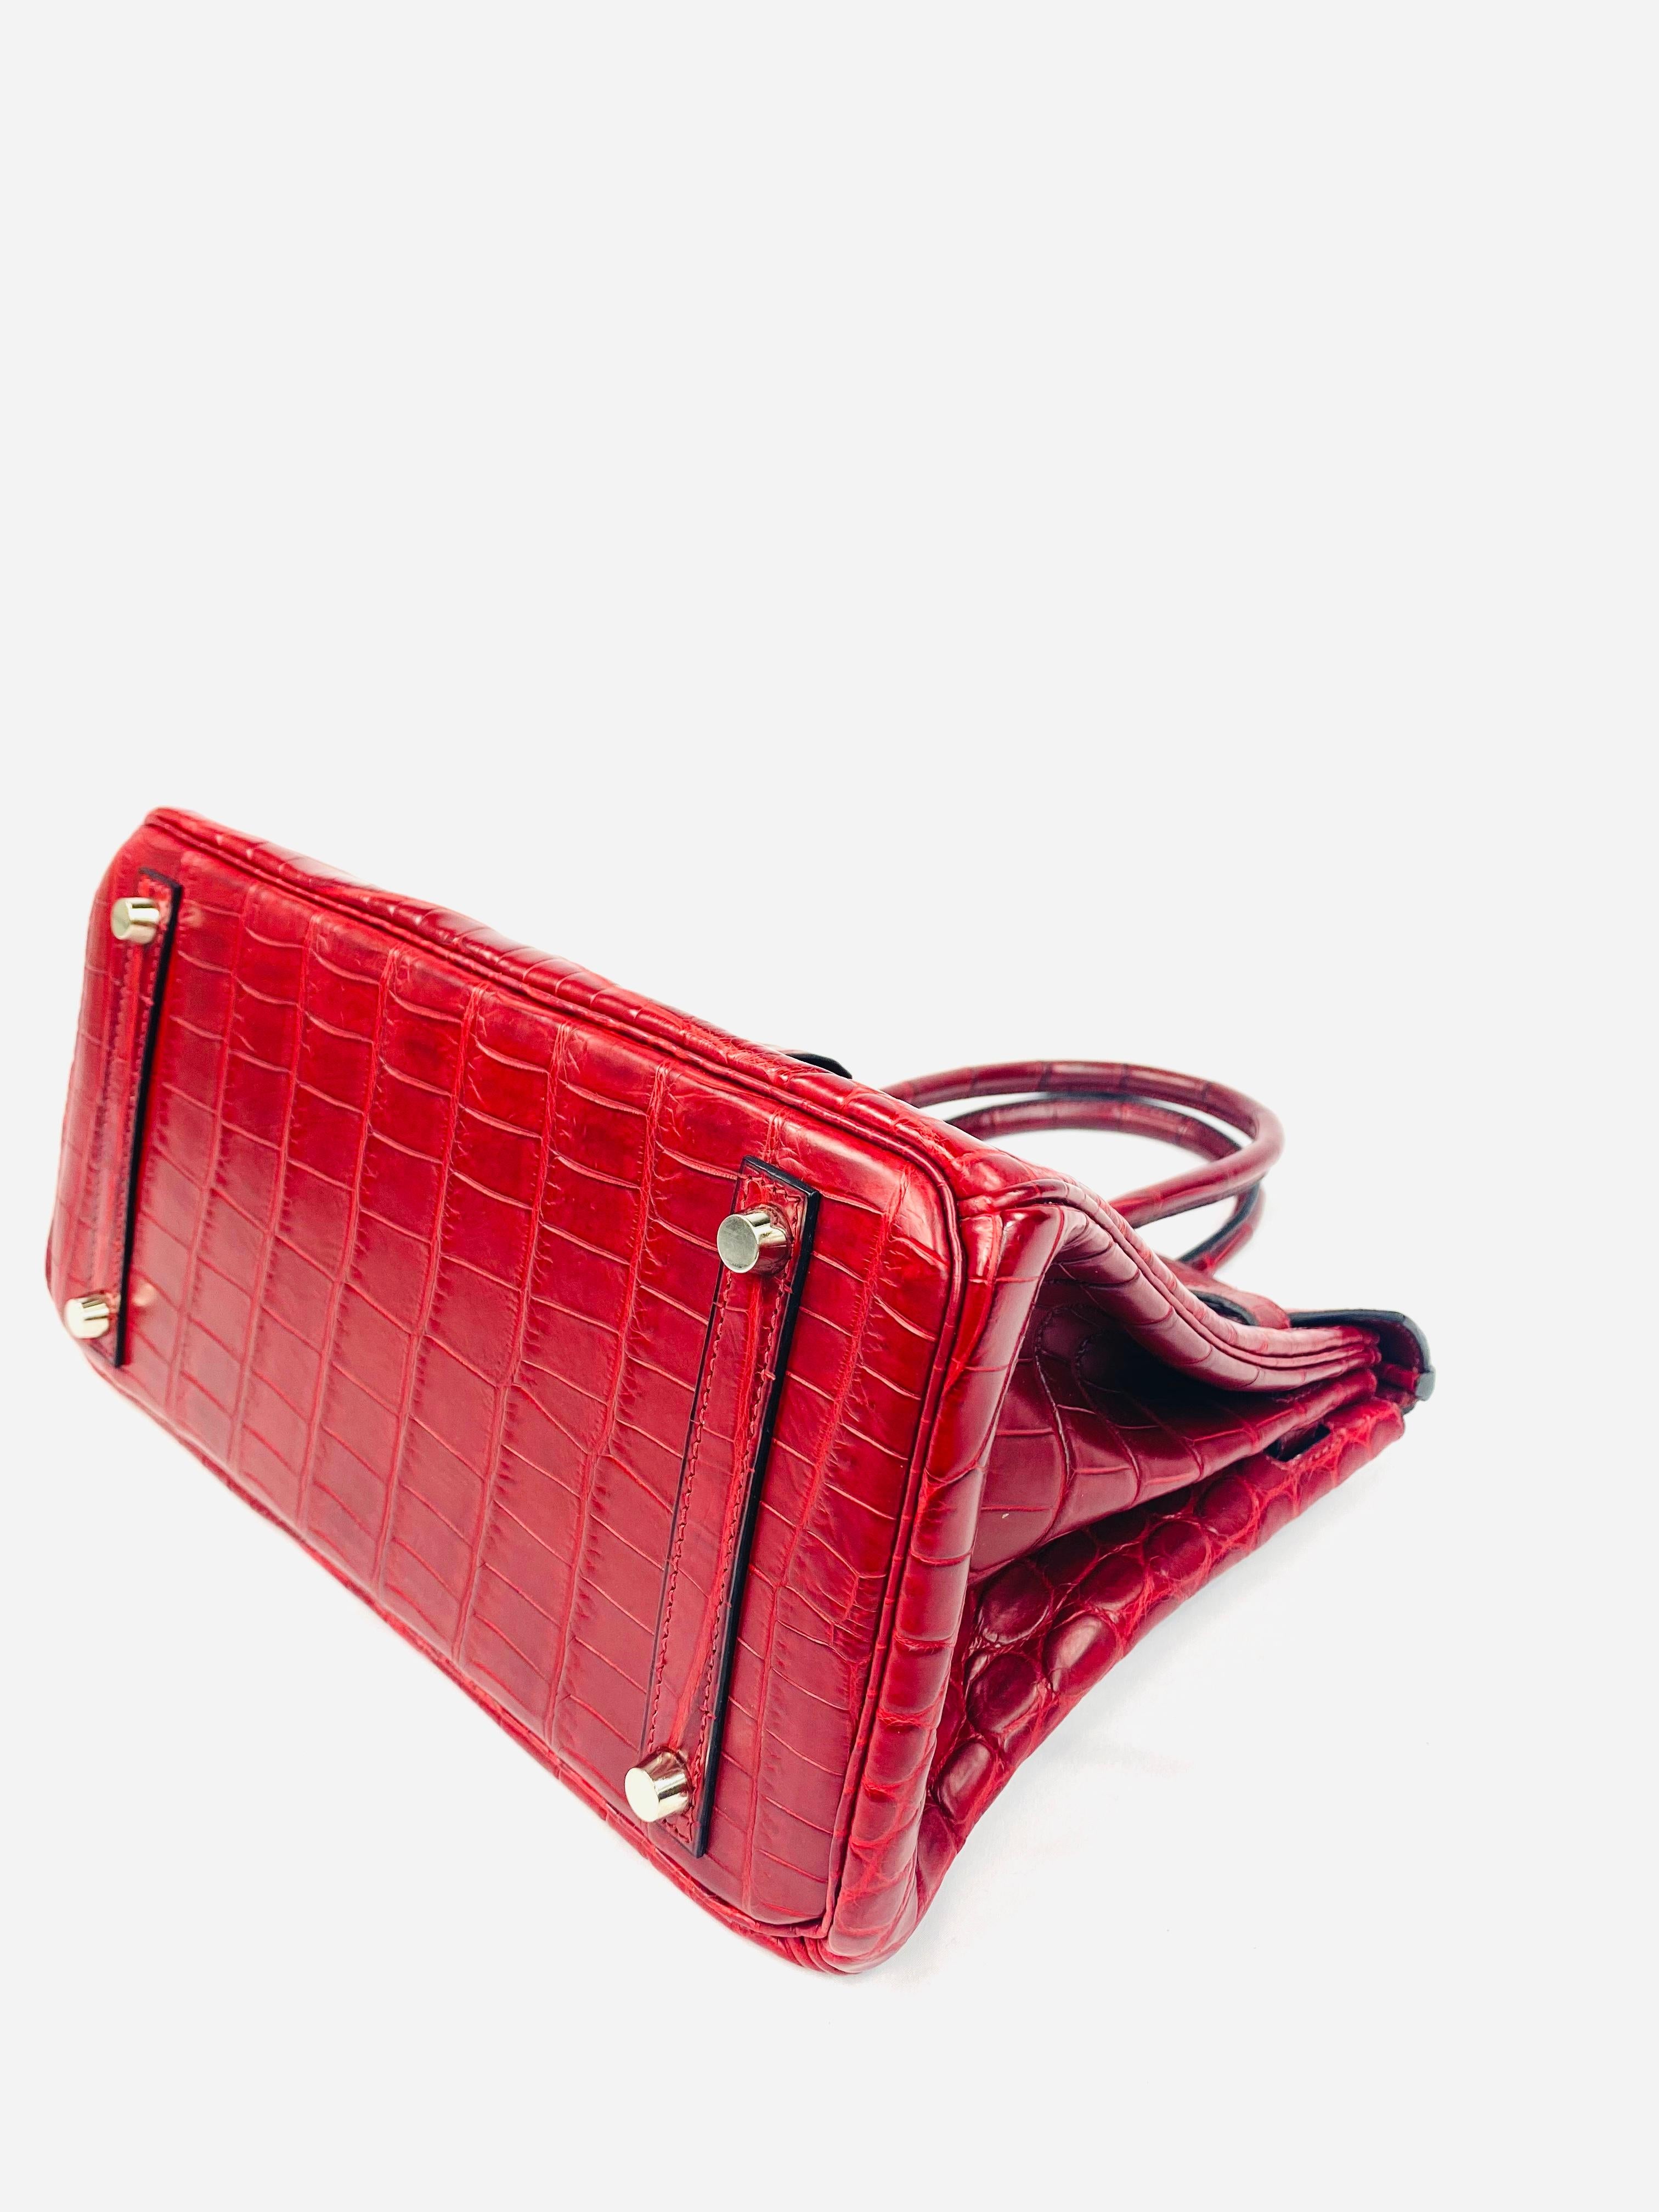 Hermès Niloticus Red Crocodile Leather Birkin 30 Handbag 2